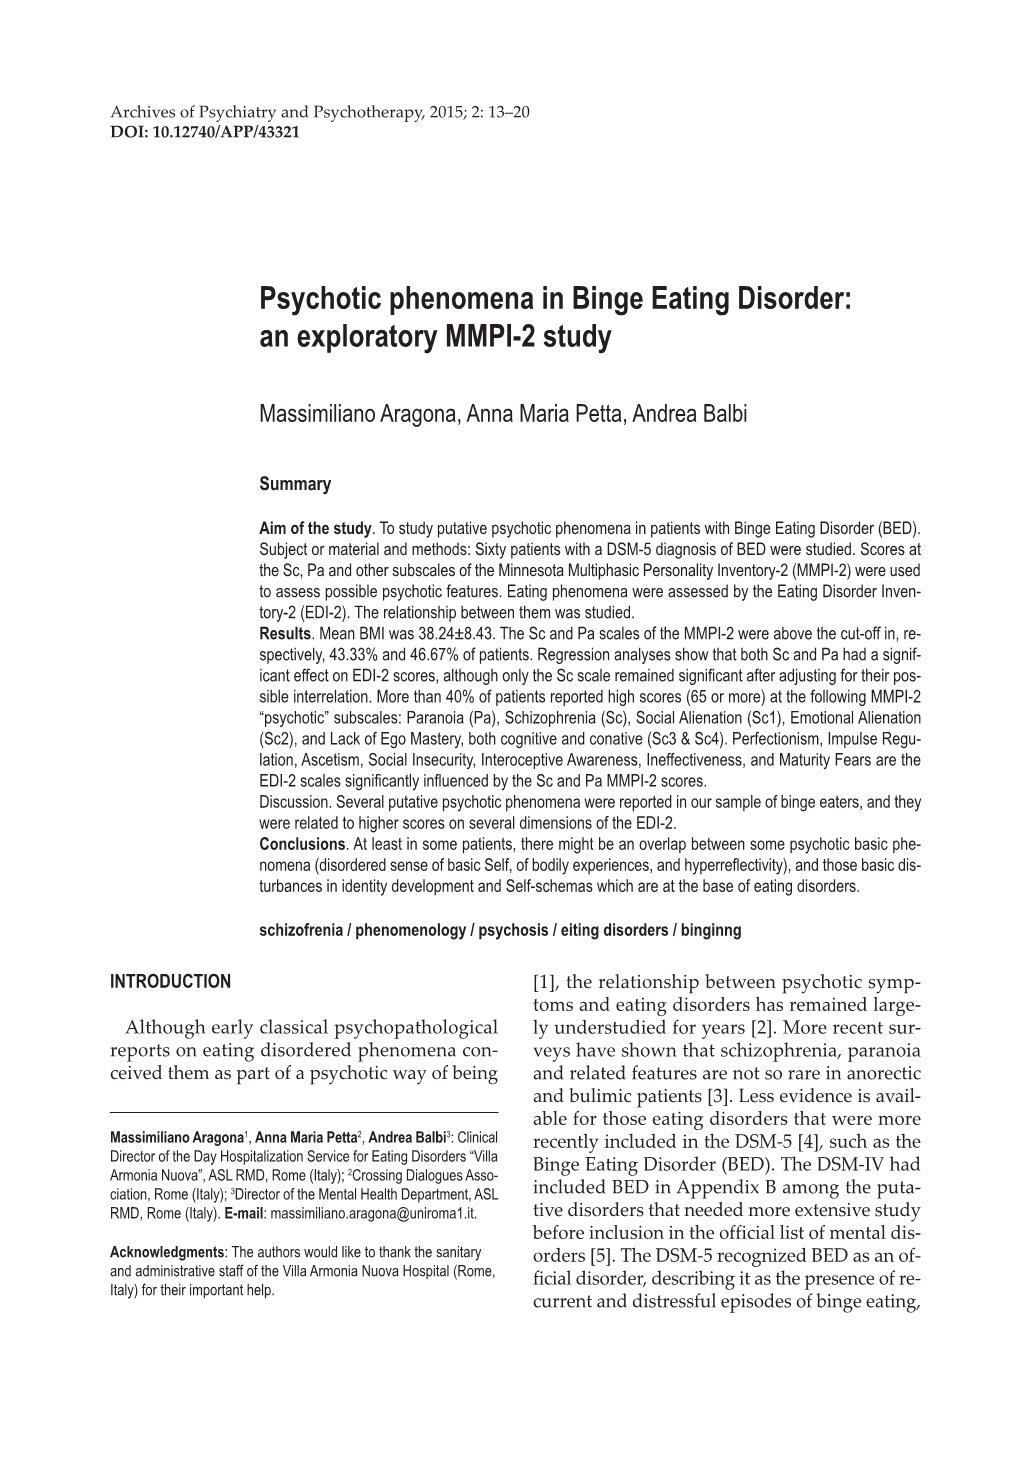 Psychotic Phenomena in Binge Eating Disorder: an Exploratory MMPI-2 Study